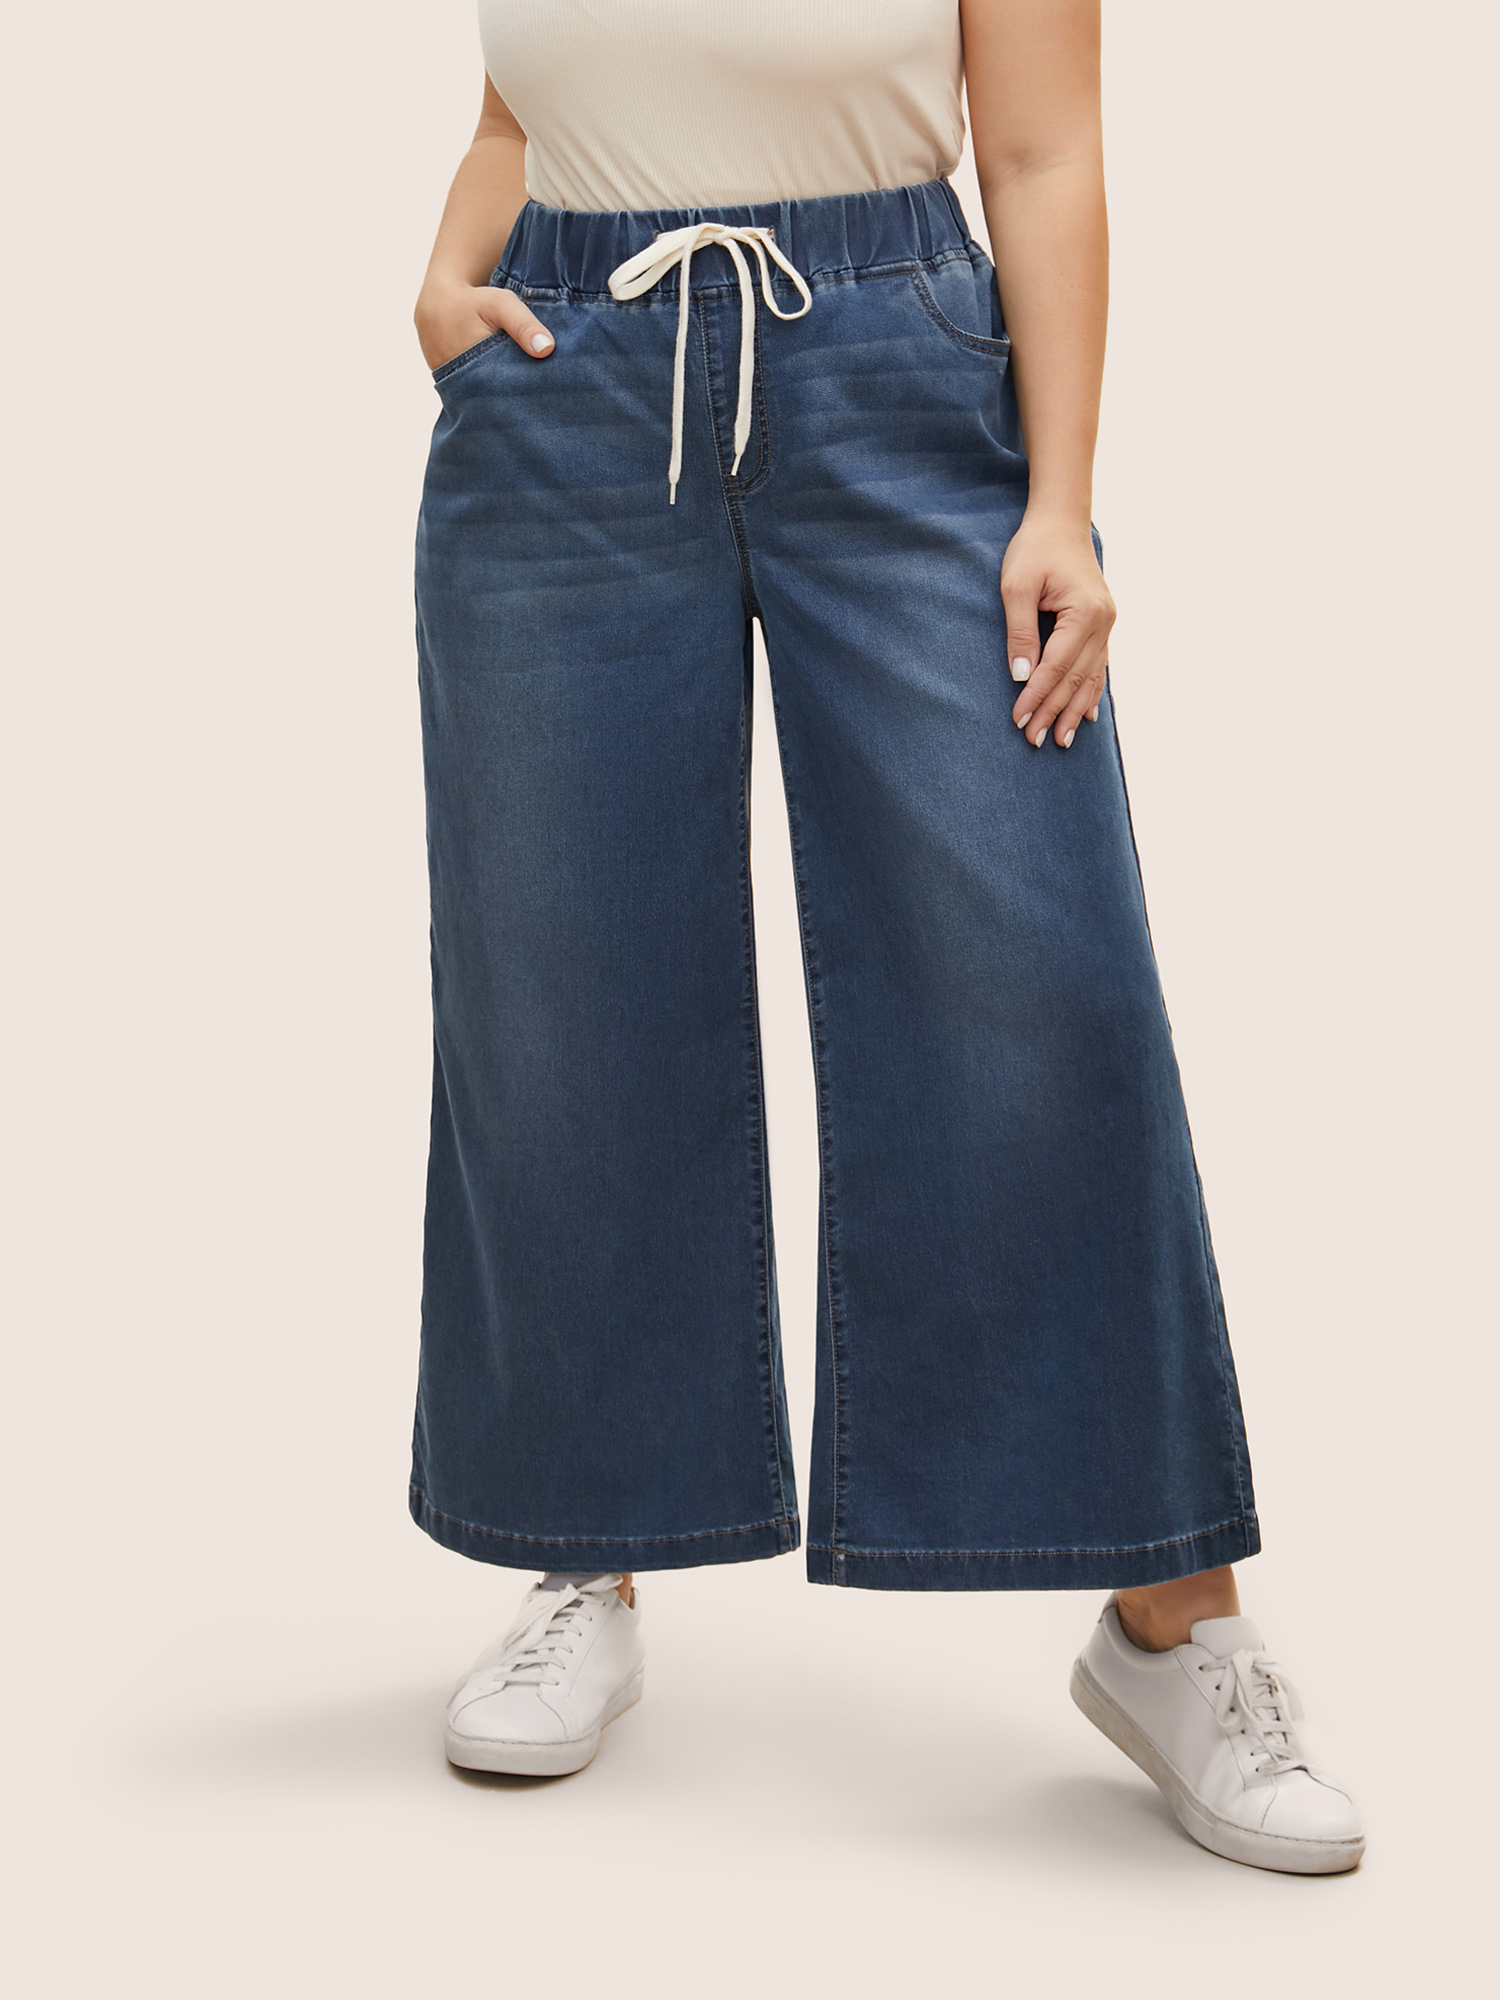 

Plus Size Dark Wash Drawstring Wide Leg Jeans Women Denimblue Casual Drawstring High stretch Slanted pocket Jeans BloomChic